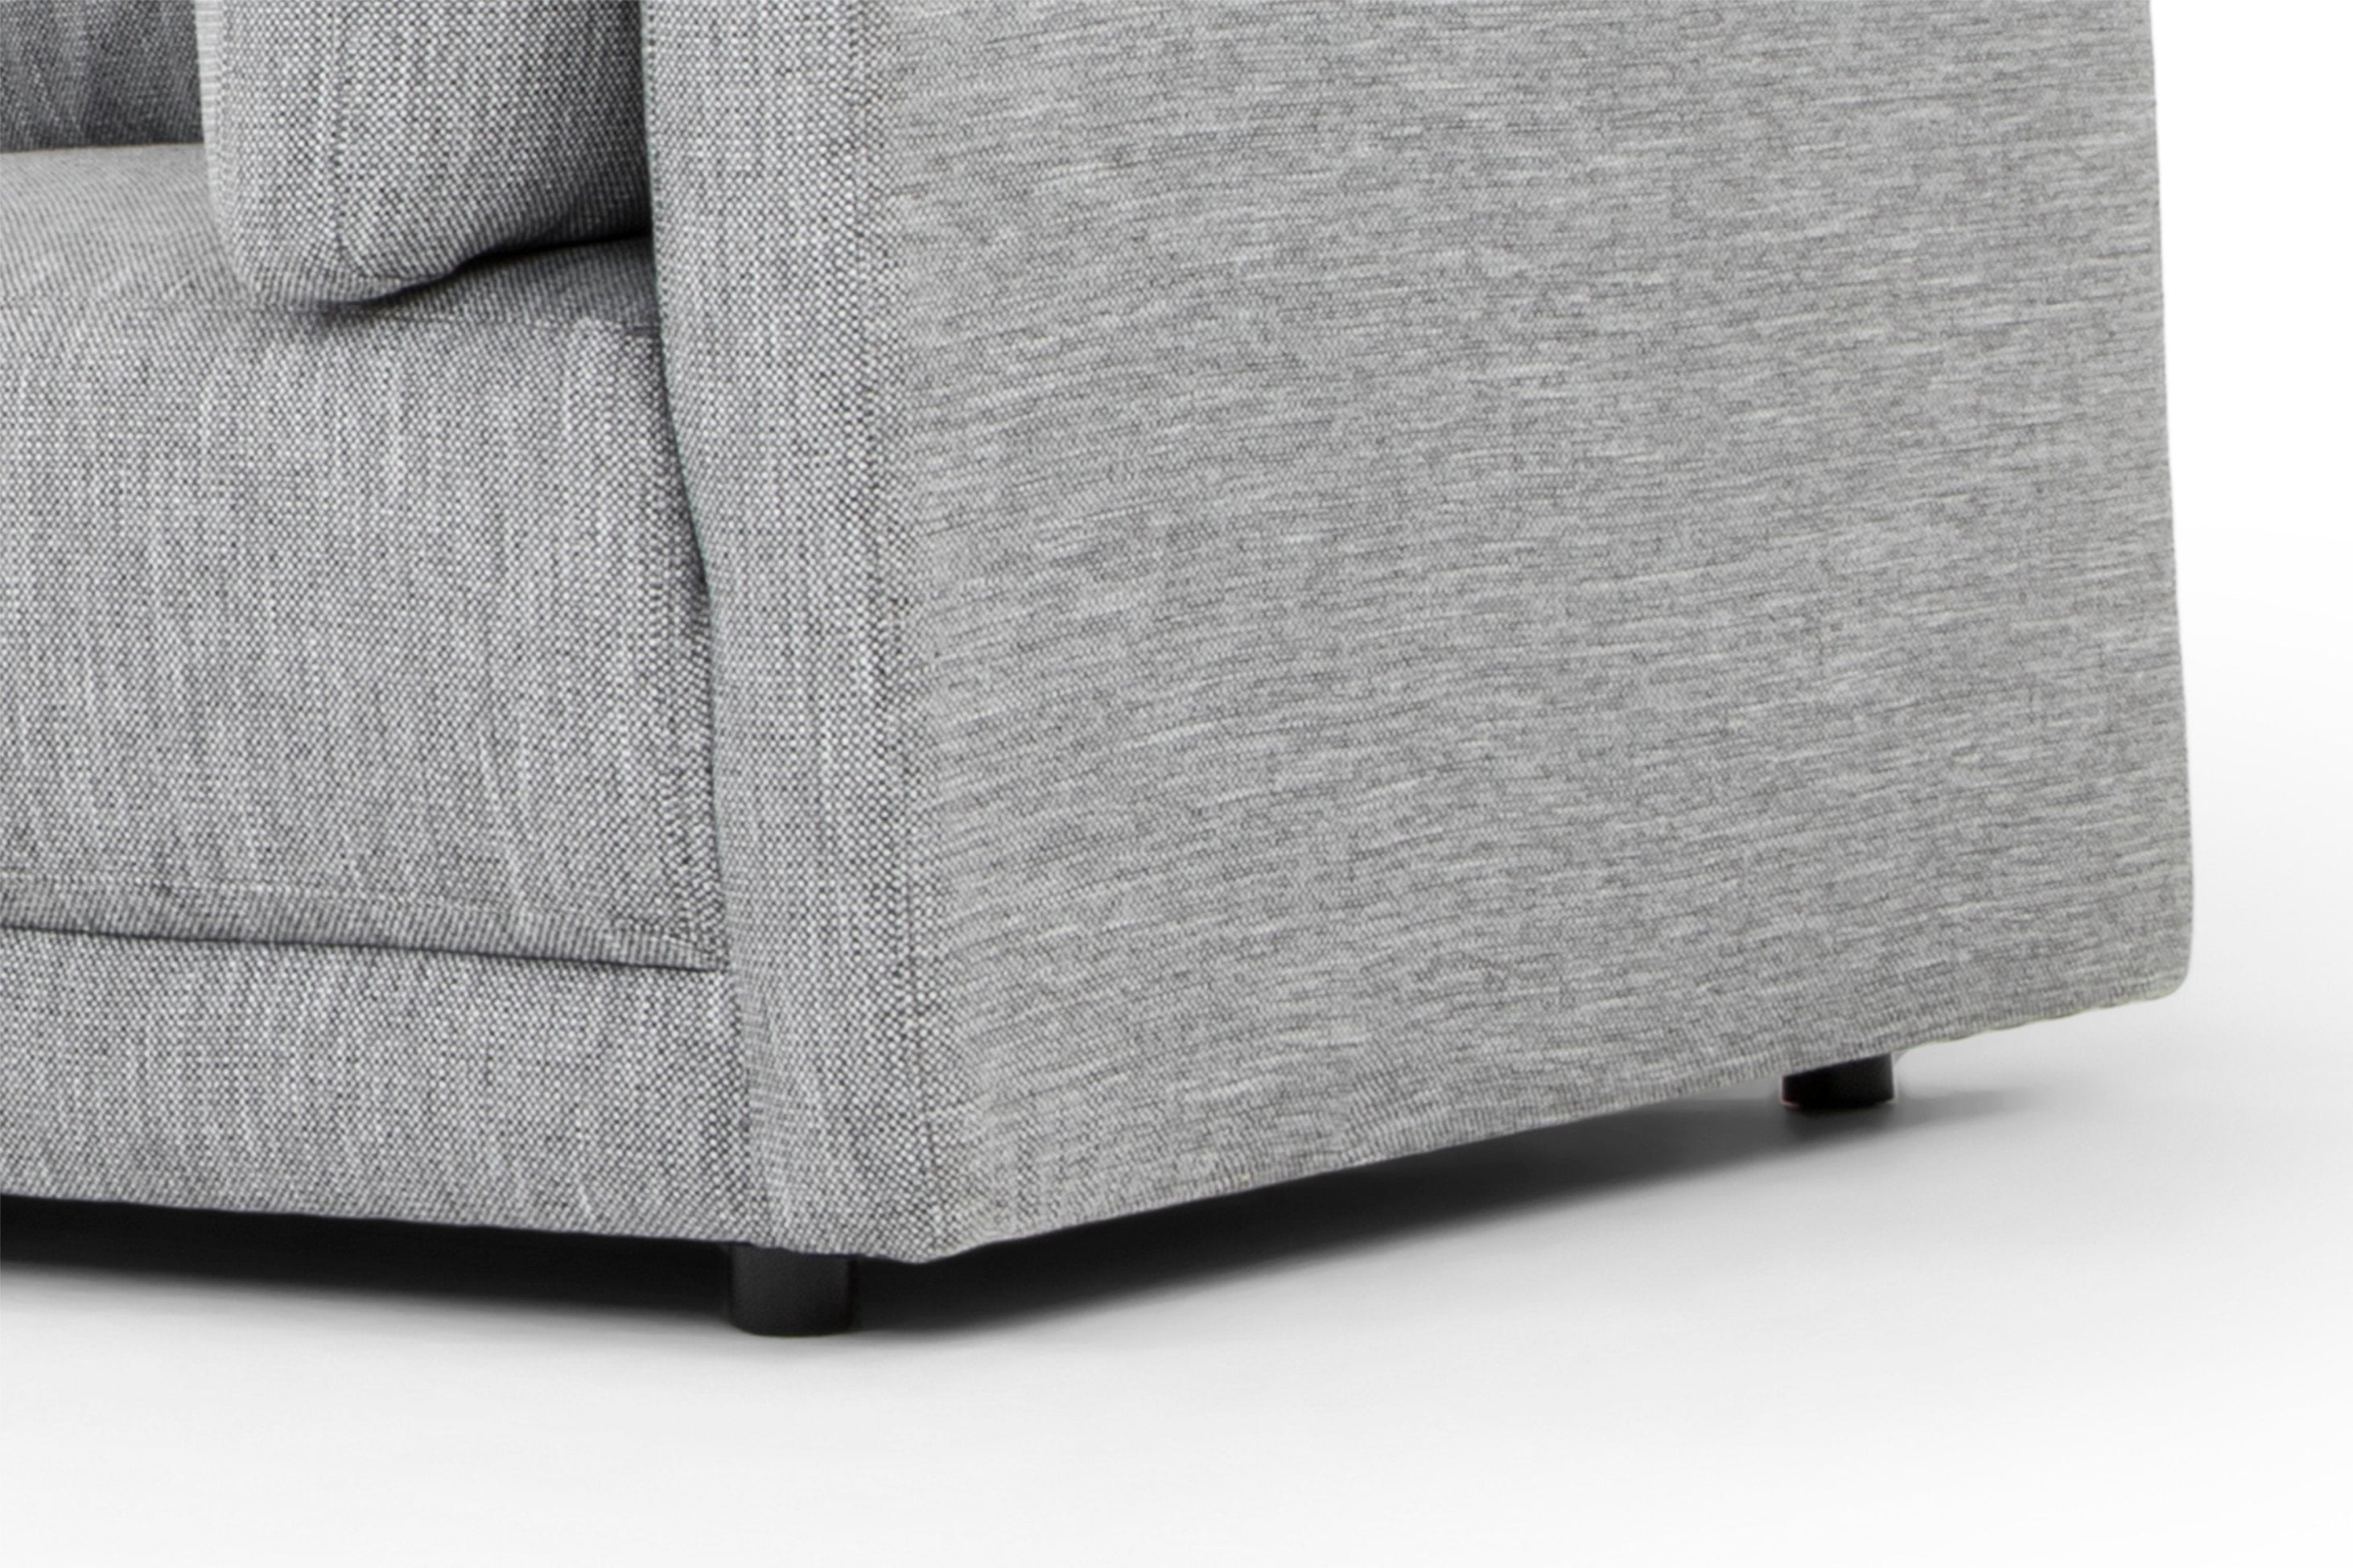 Kiera 3S Left Chaise Sofa - Graphite Grey - Sofas